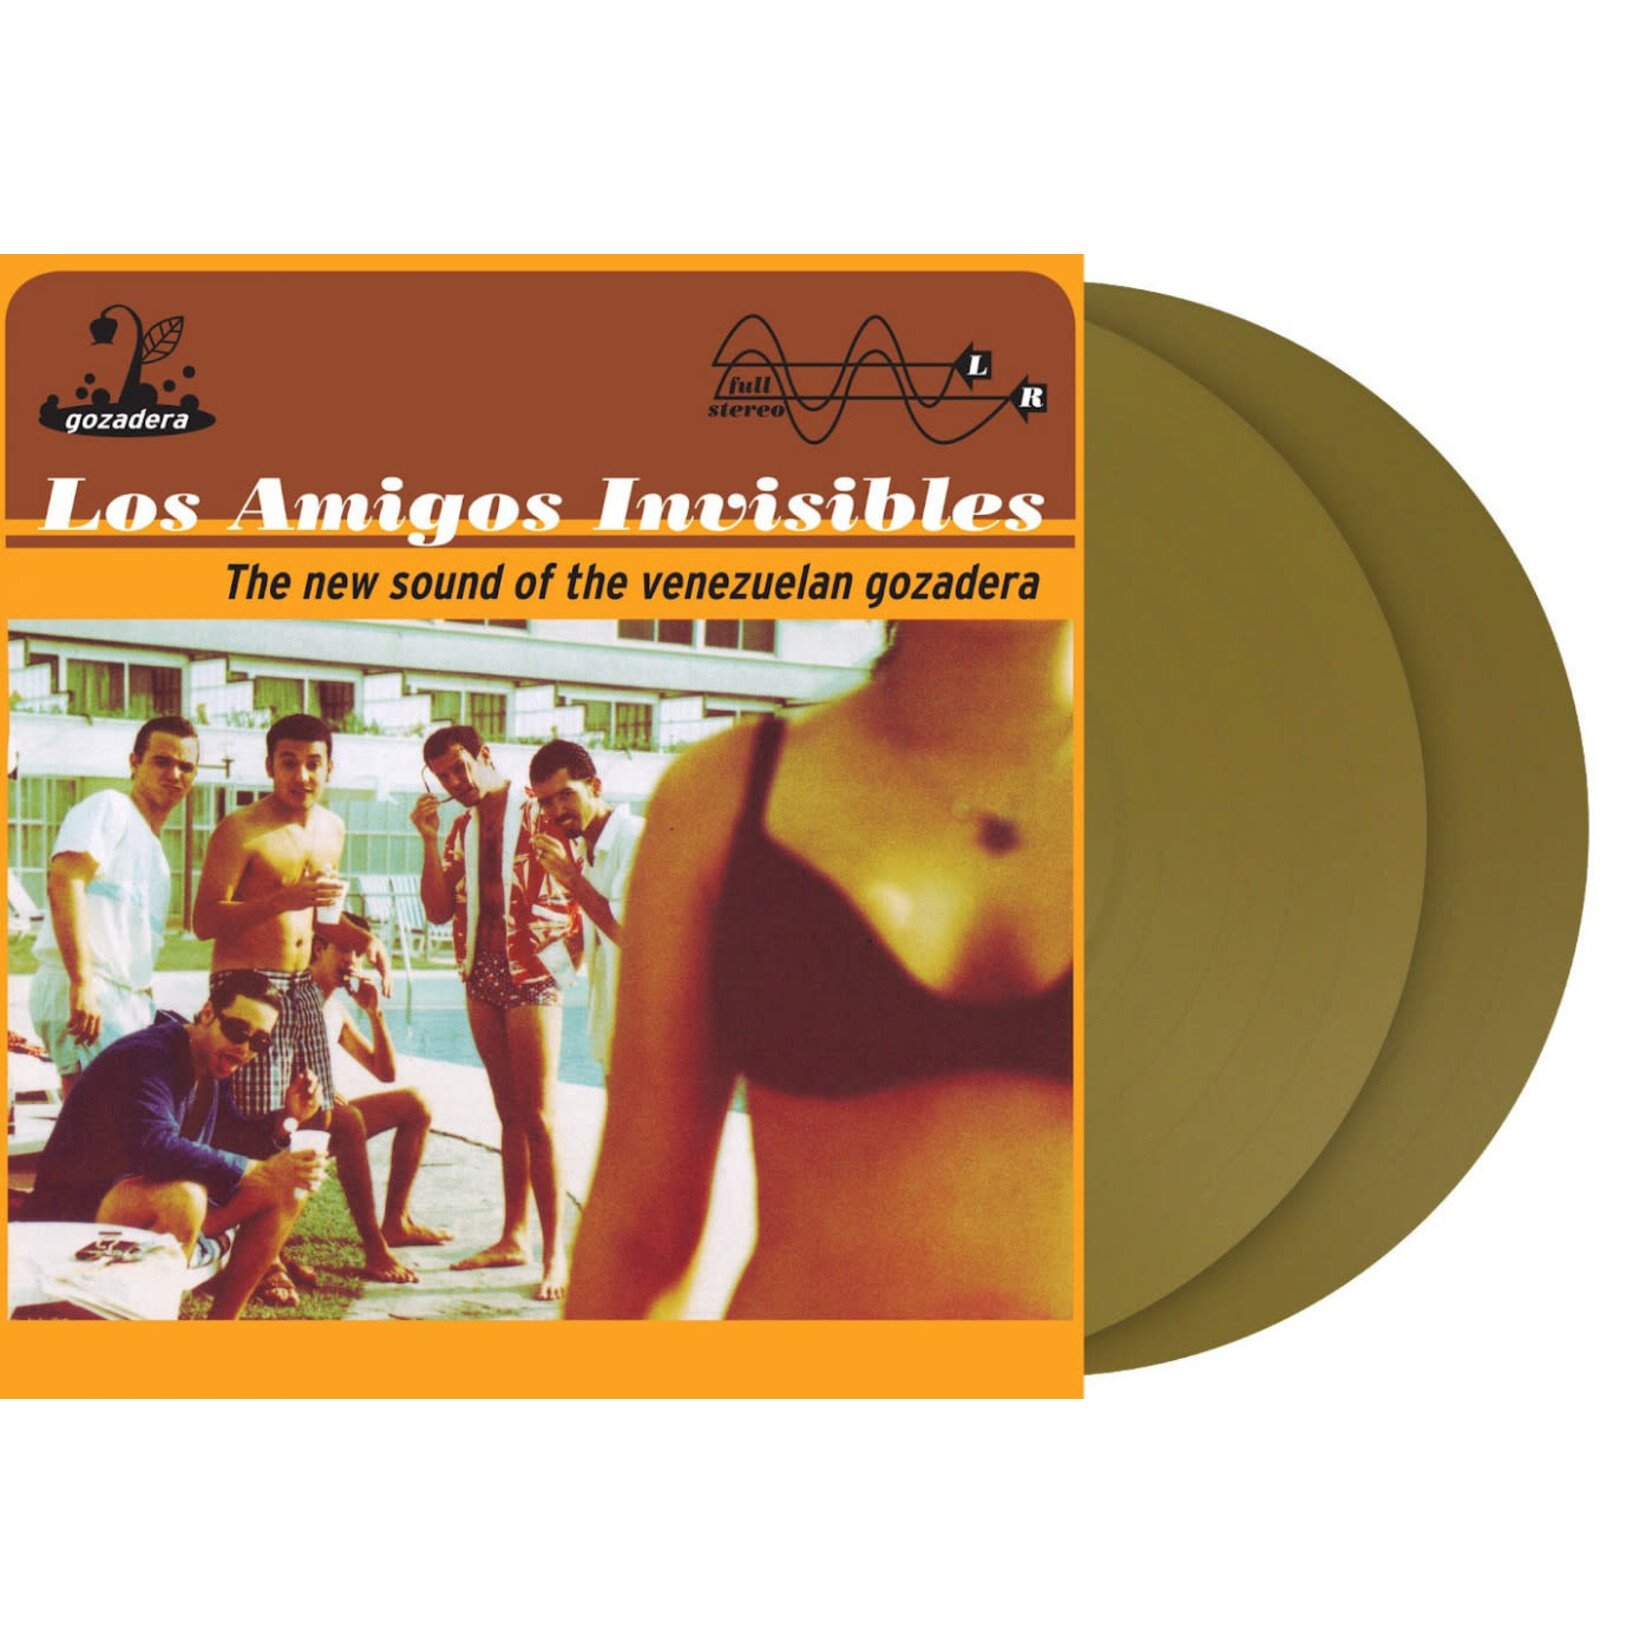 Los Amigos Invisibles - The New Sound Of The Venezuelan Gozadera - 680899003018 - Vinyl LP (NEW - GOLD)